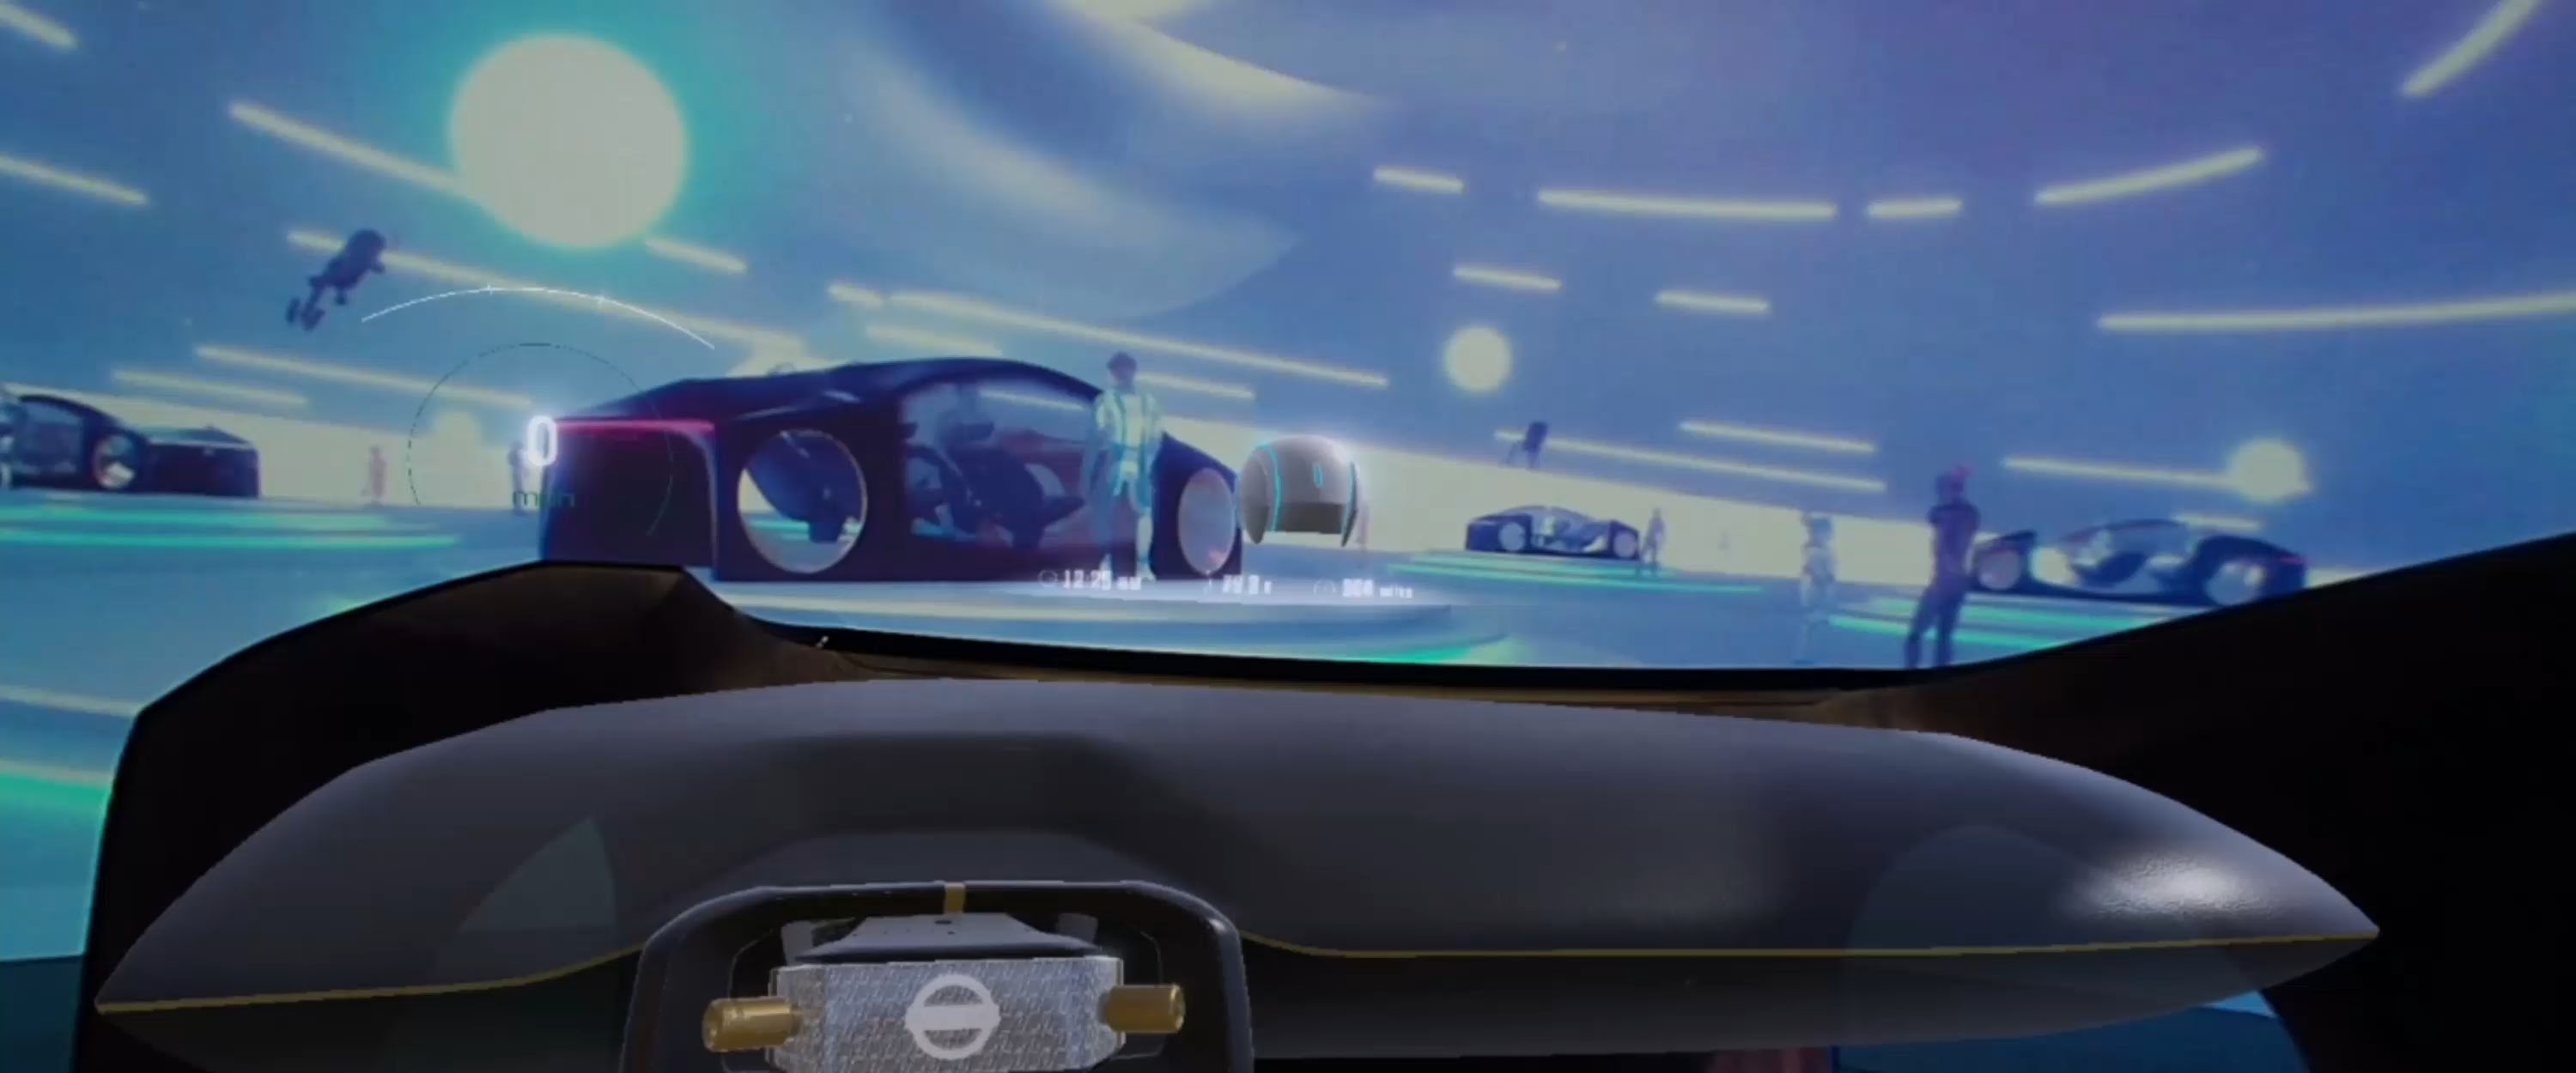 Nissan IV2 Simulator shot unveiled at CES in Las Vegas Nevada